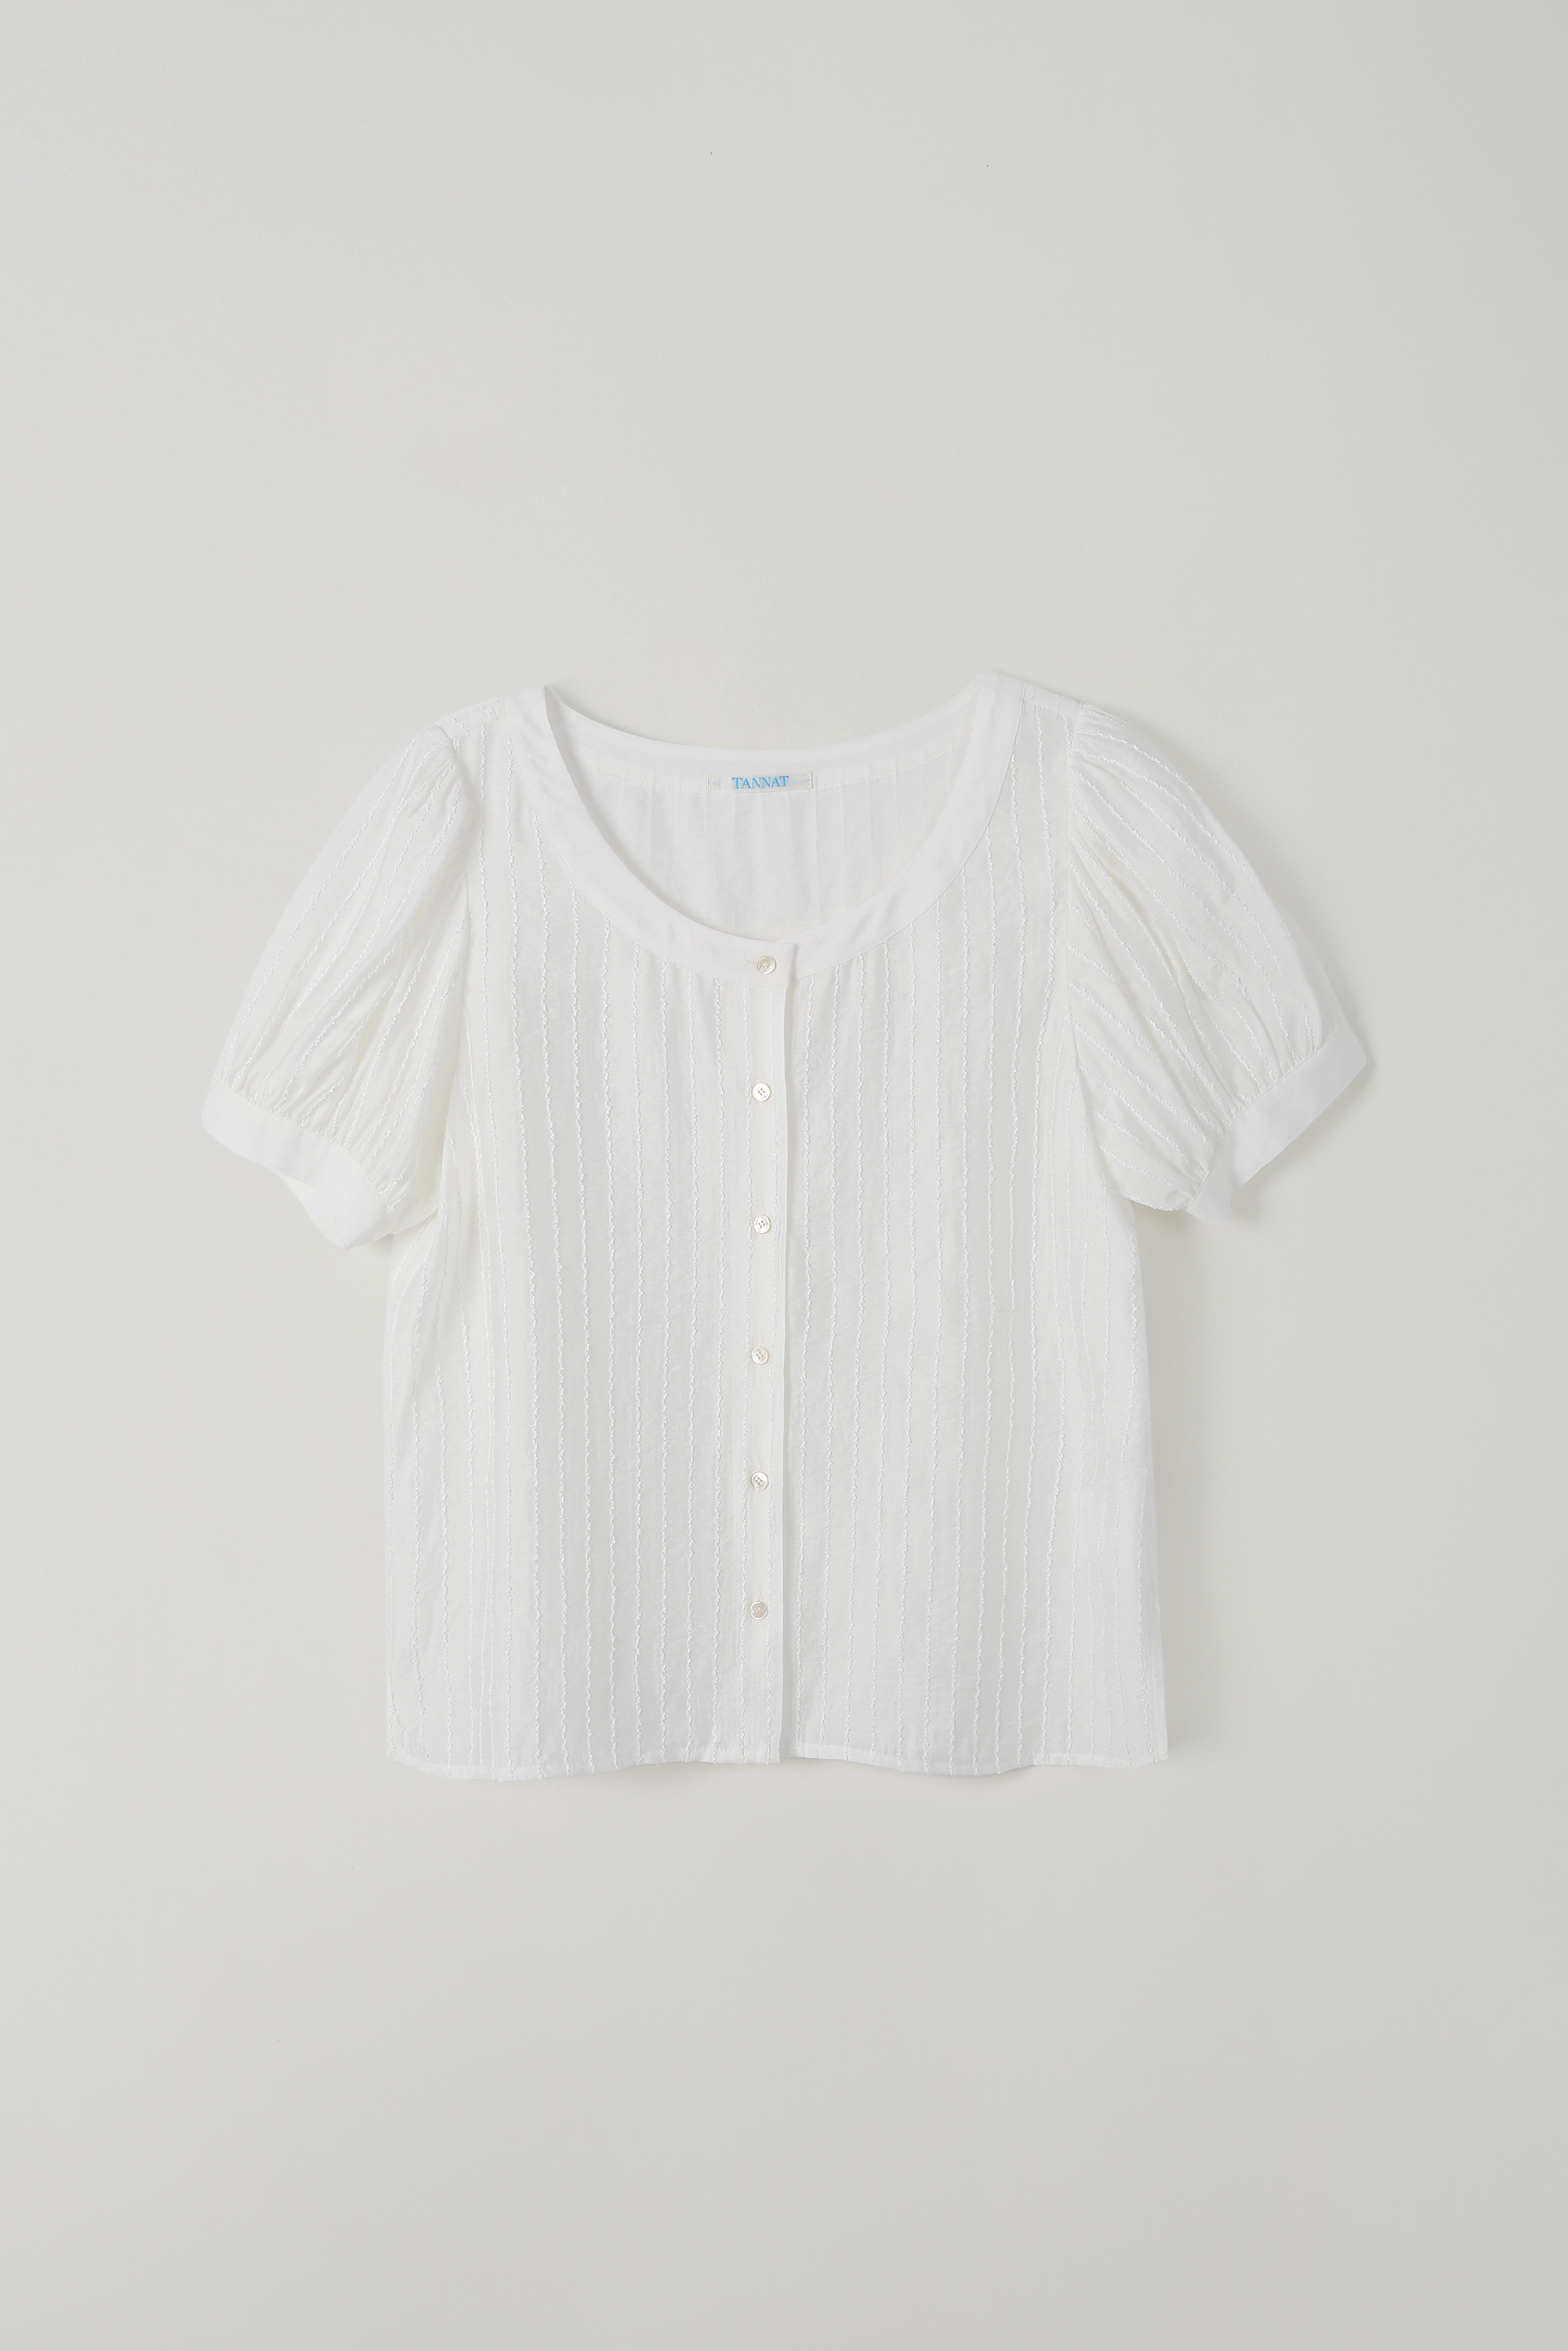 (1st re-stock) T/T Lace chiffon blouse (white)